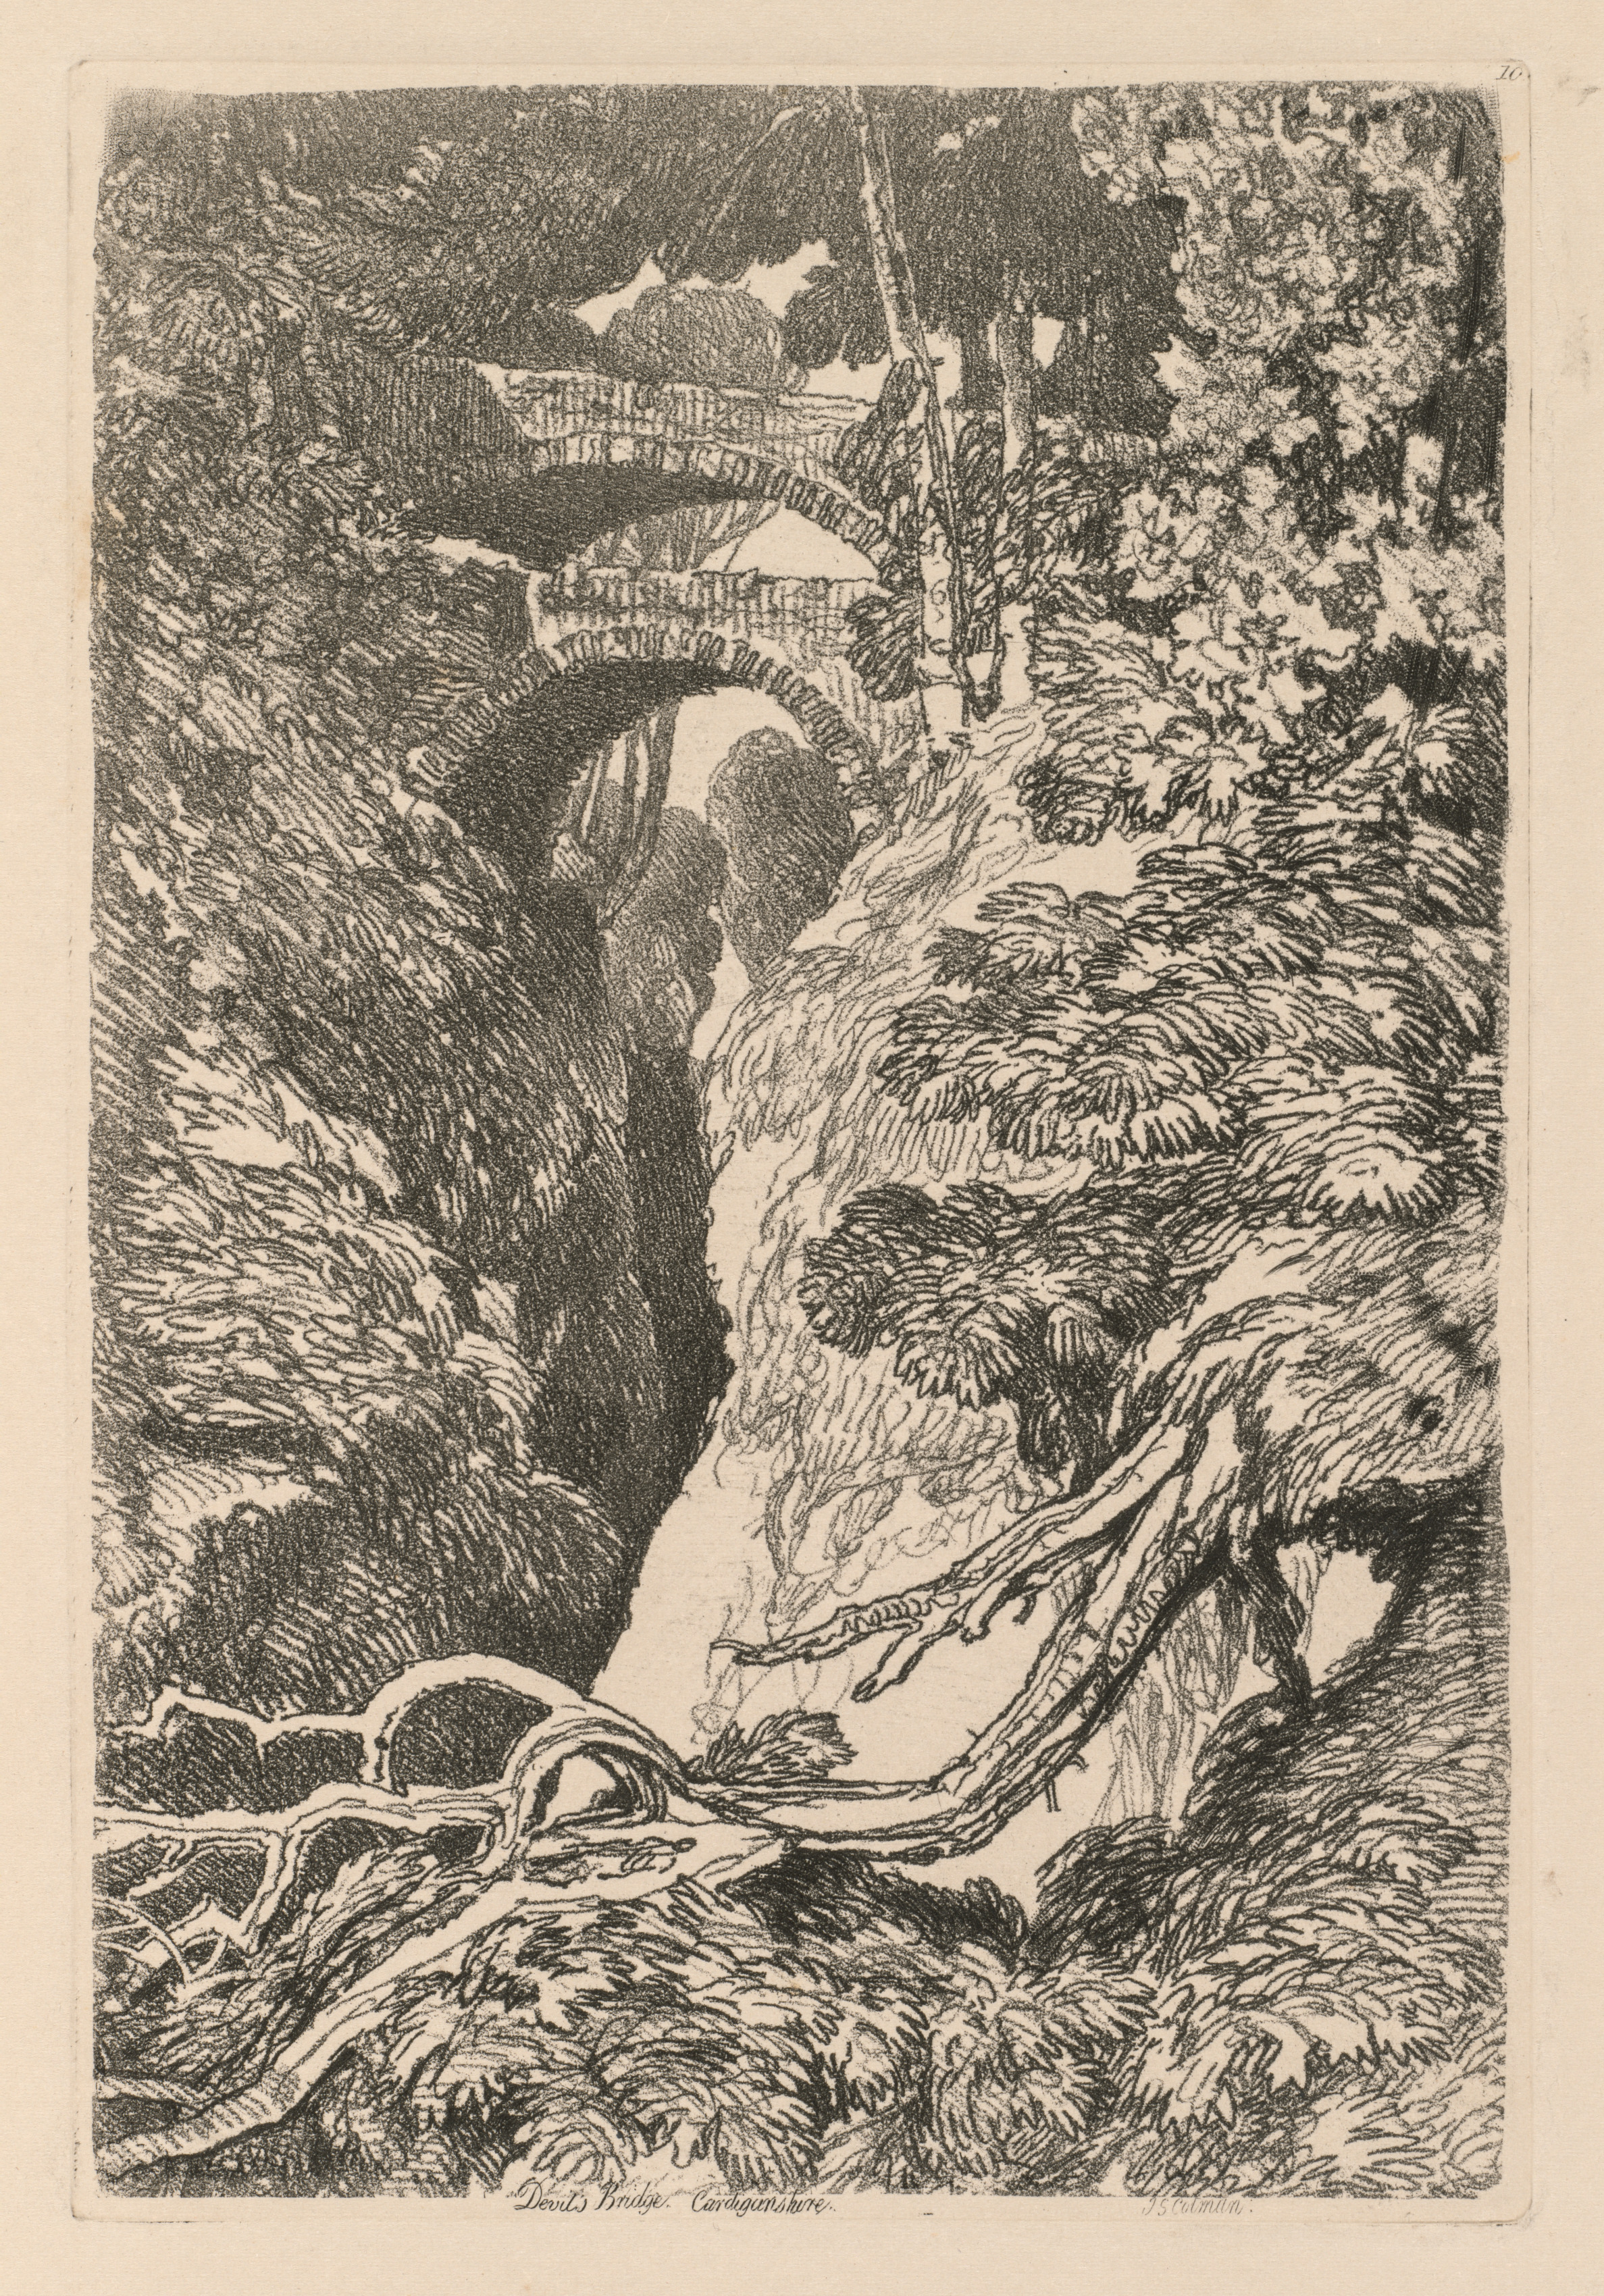 Liber Studiorum: Plate 10, The Devil's Bridge, Cardinganshire